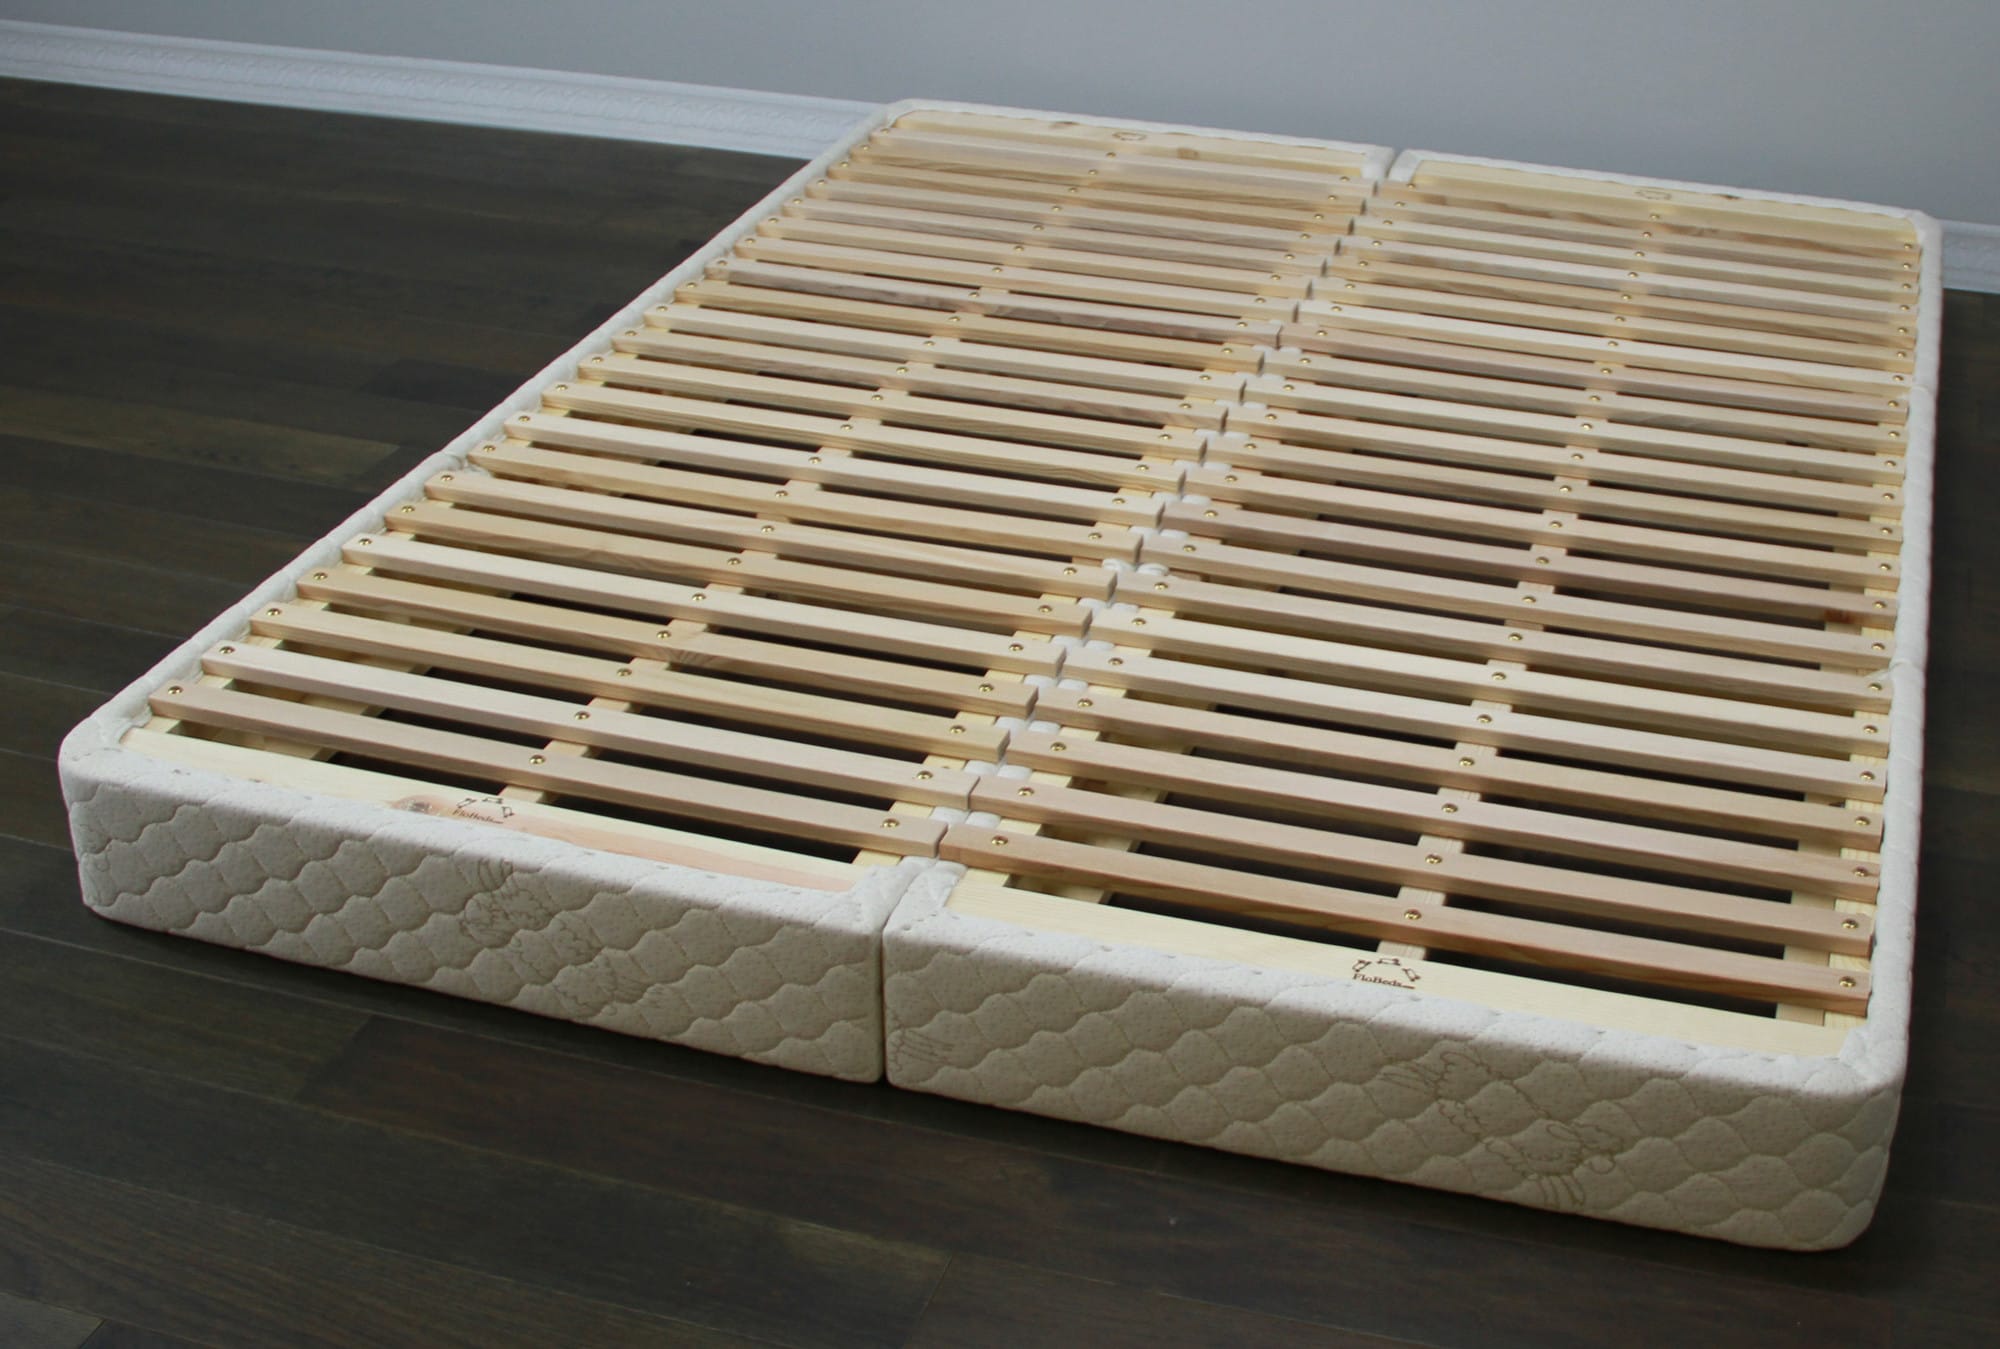 foundation for latex mattress